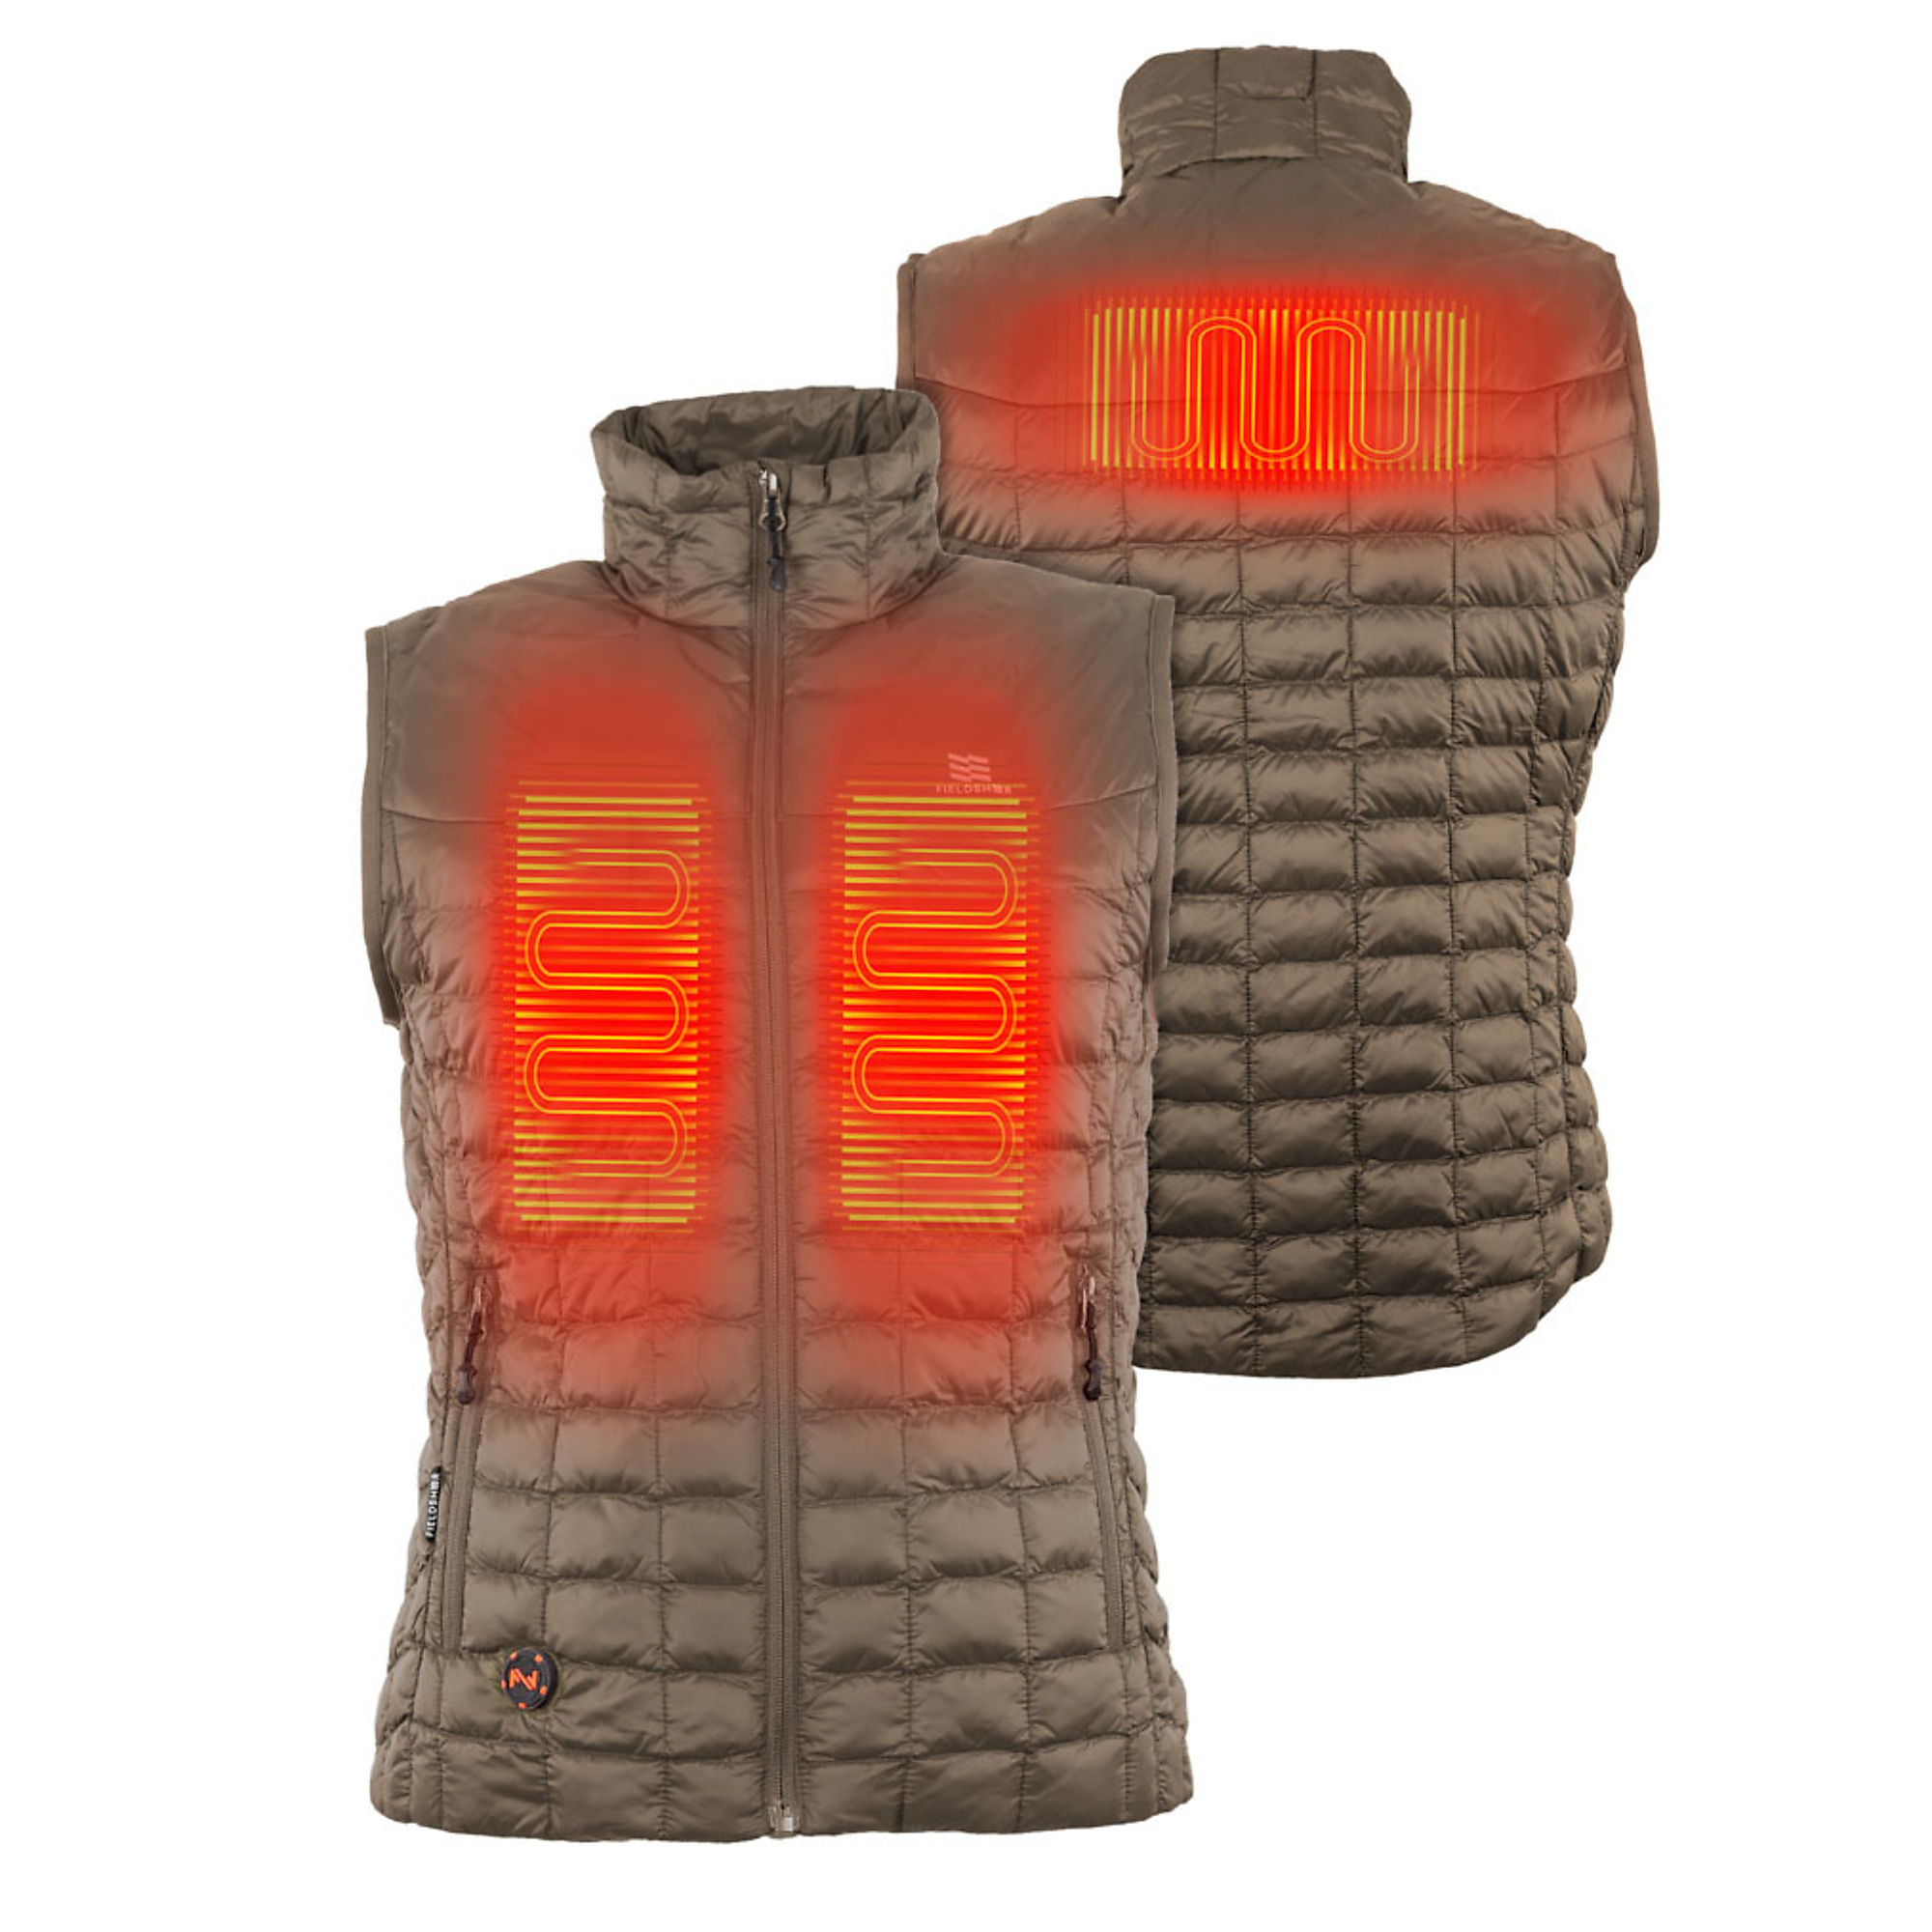 Fieldsheer, Women's 7.4v Backcountry Heated Vest, Size 2XL, Color Tan, Model MWWV04340621